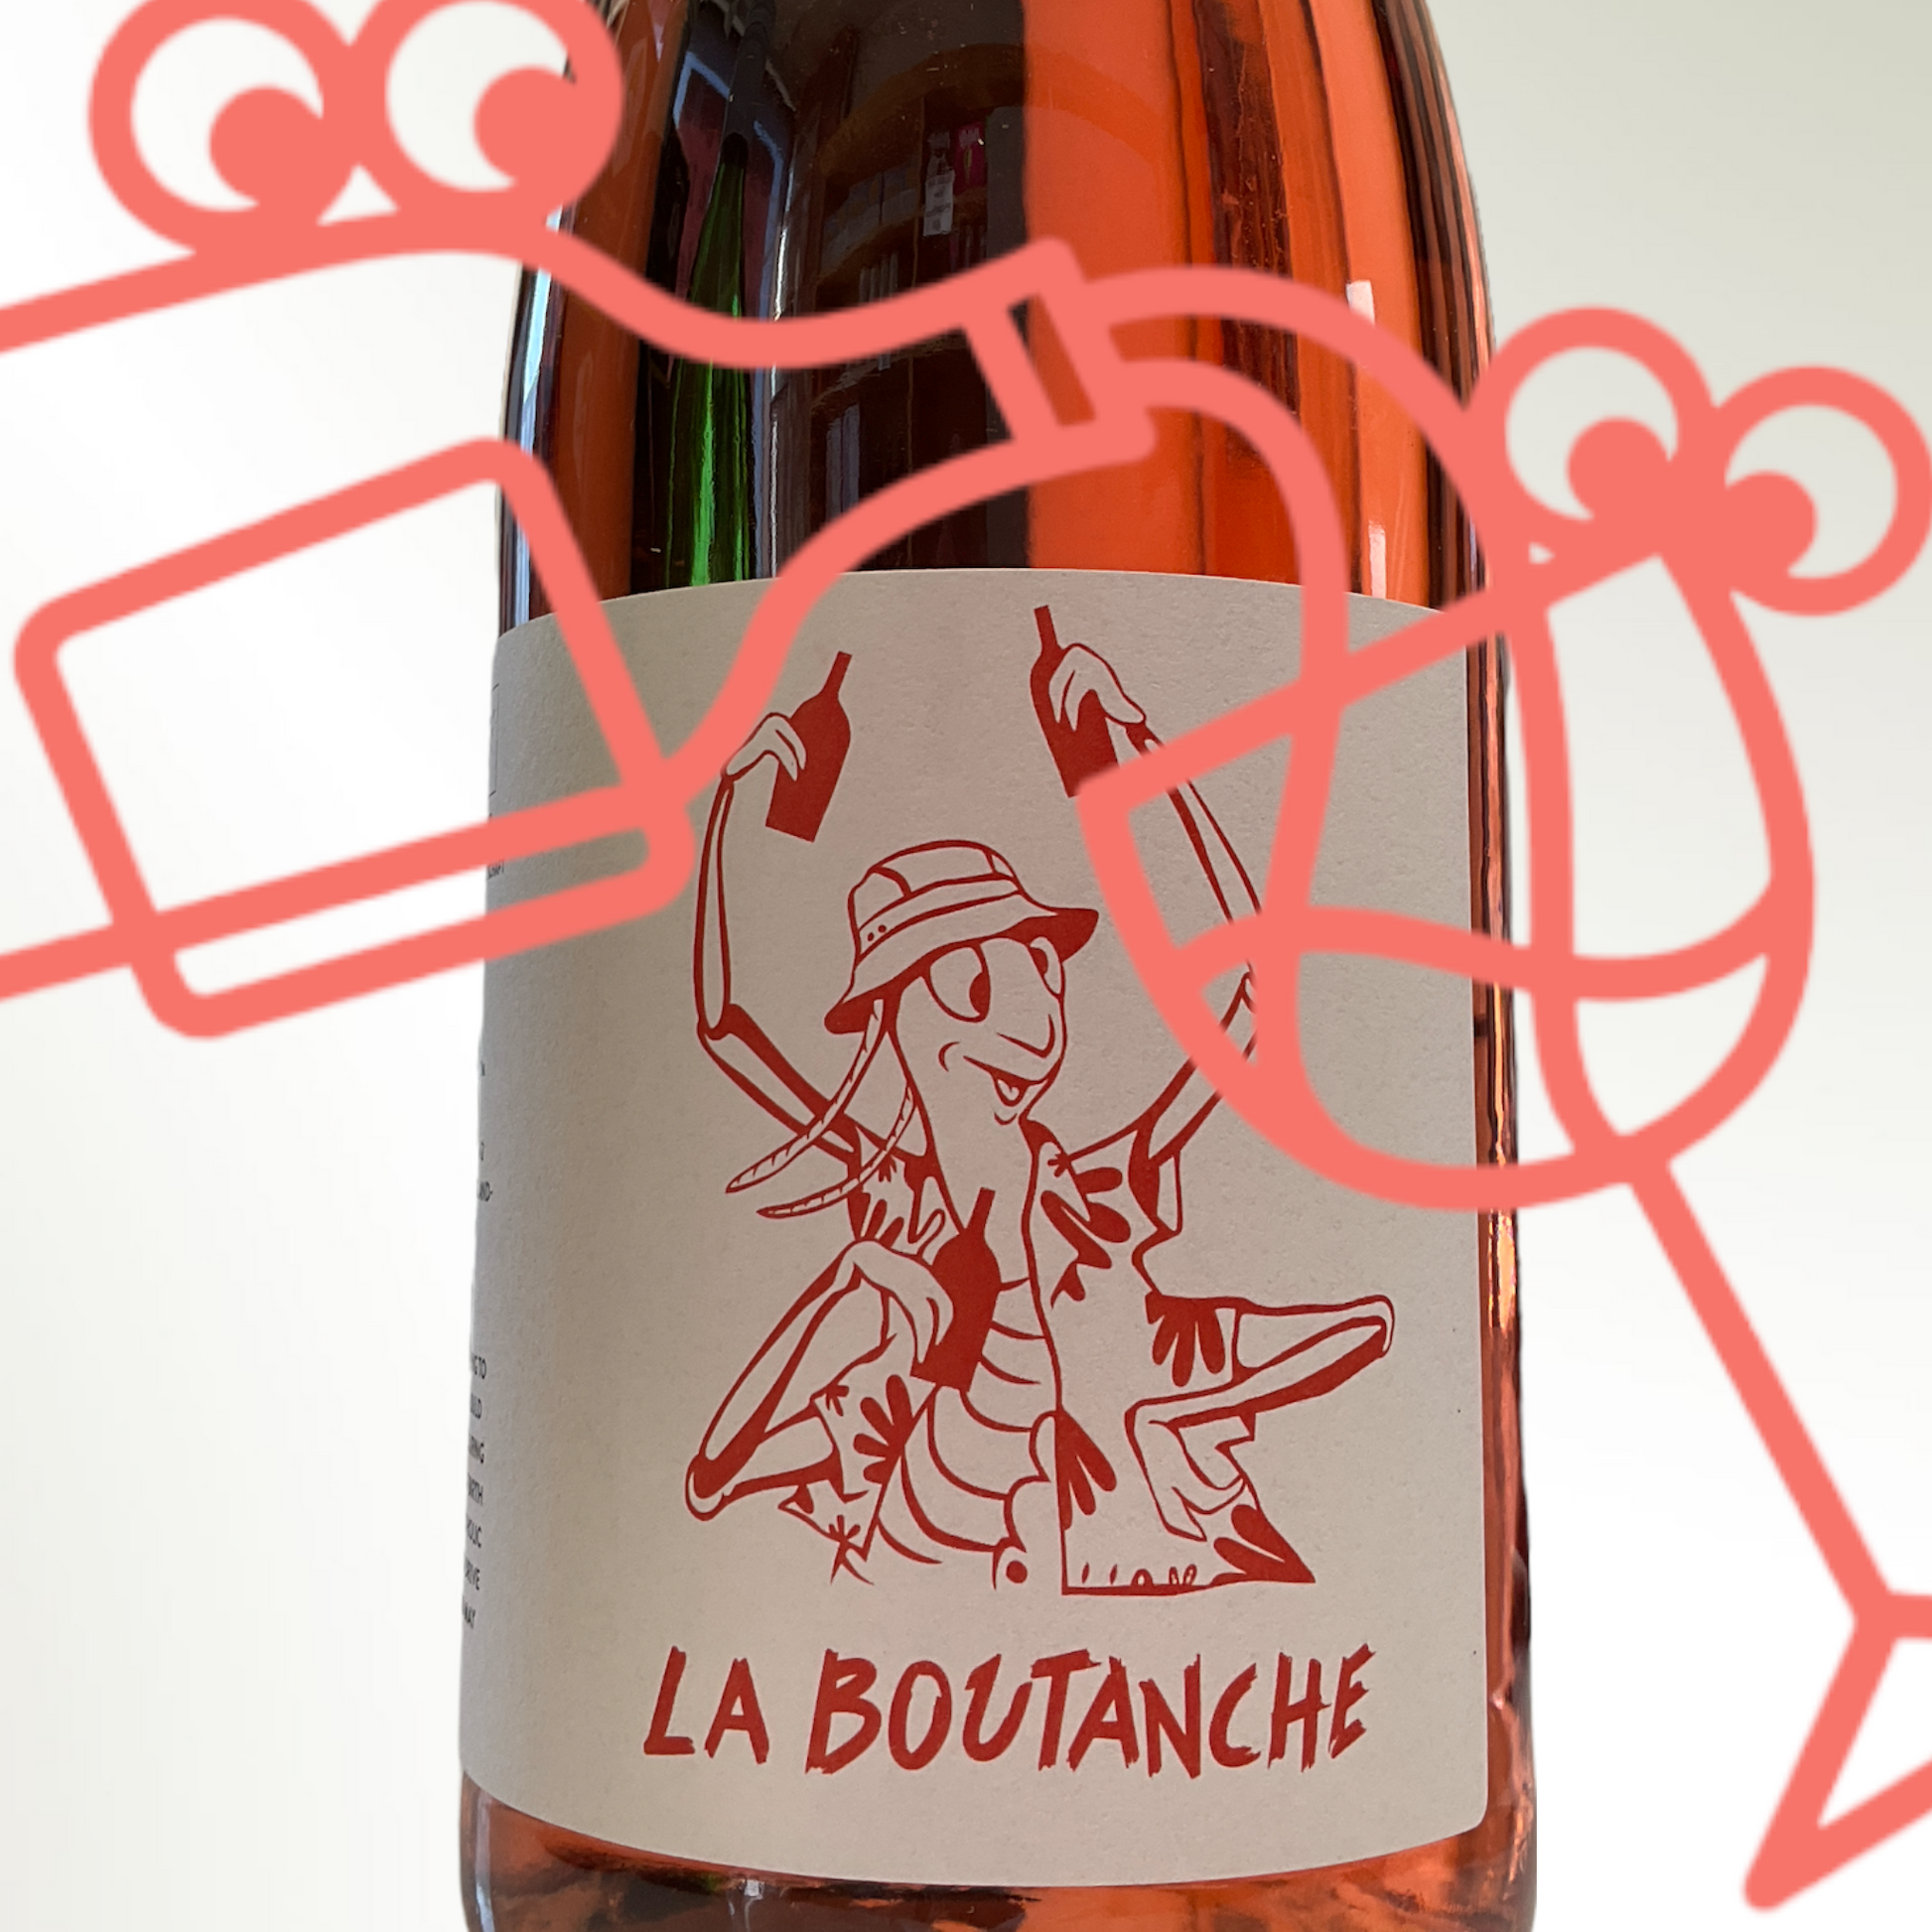 Knauss 'La Boutanche' Rosé 2021 Strümpfelbach, Germany 1L - Williston Park Wines & Spirits